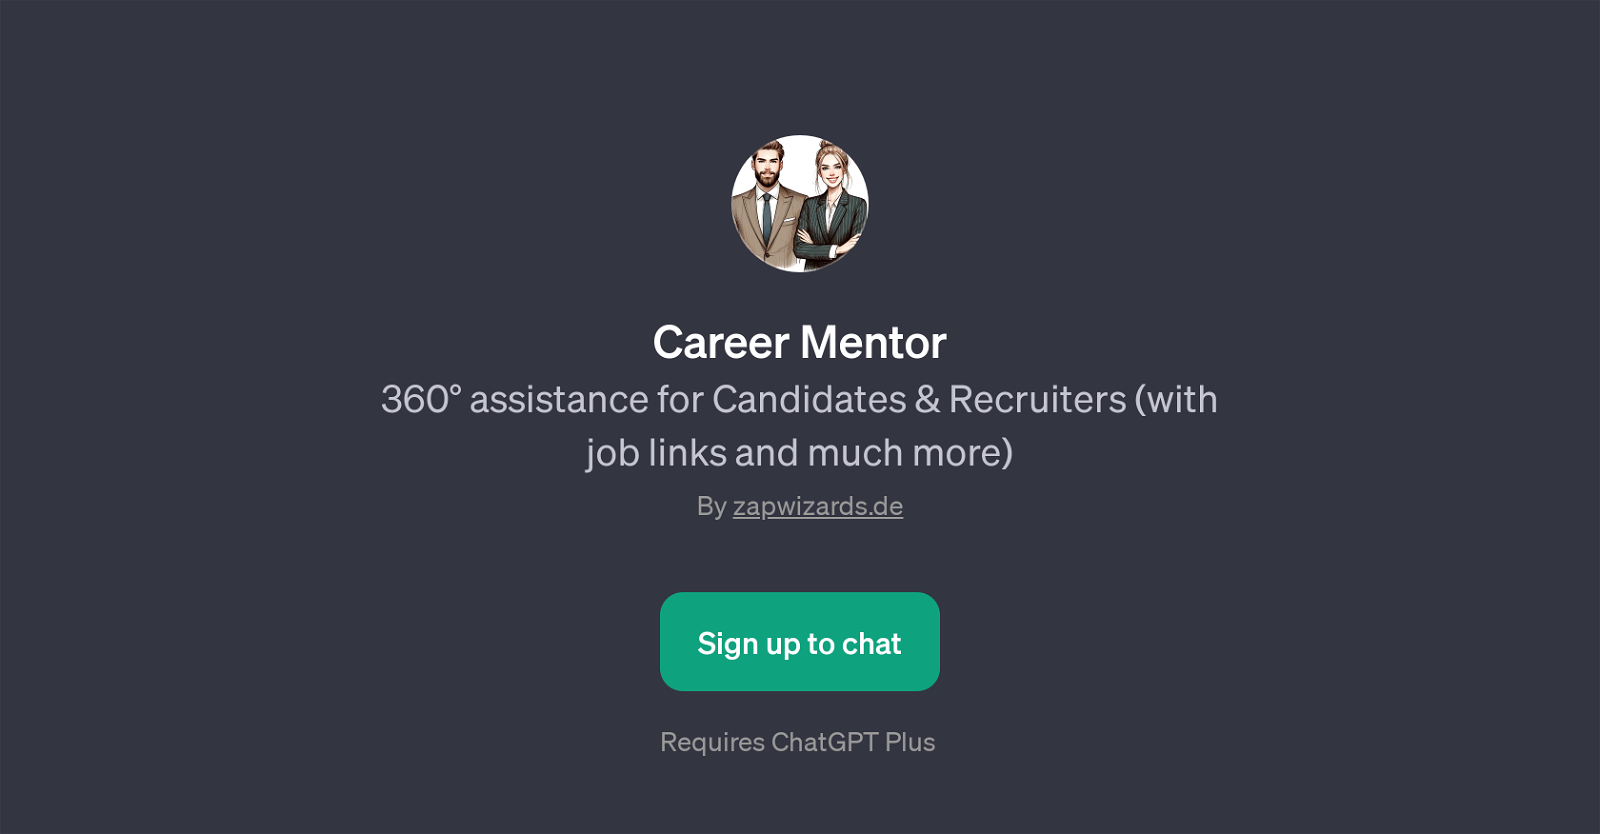 Career Mentor website